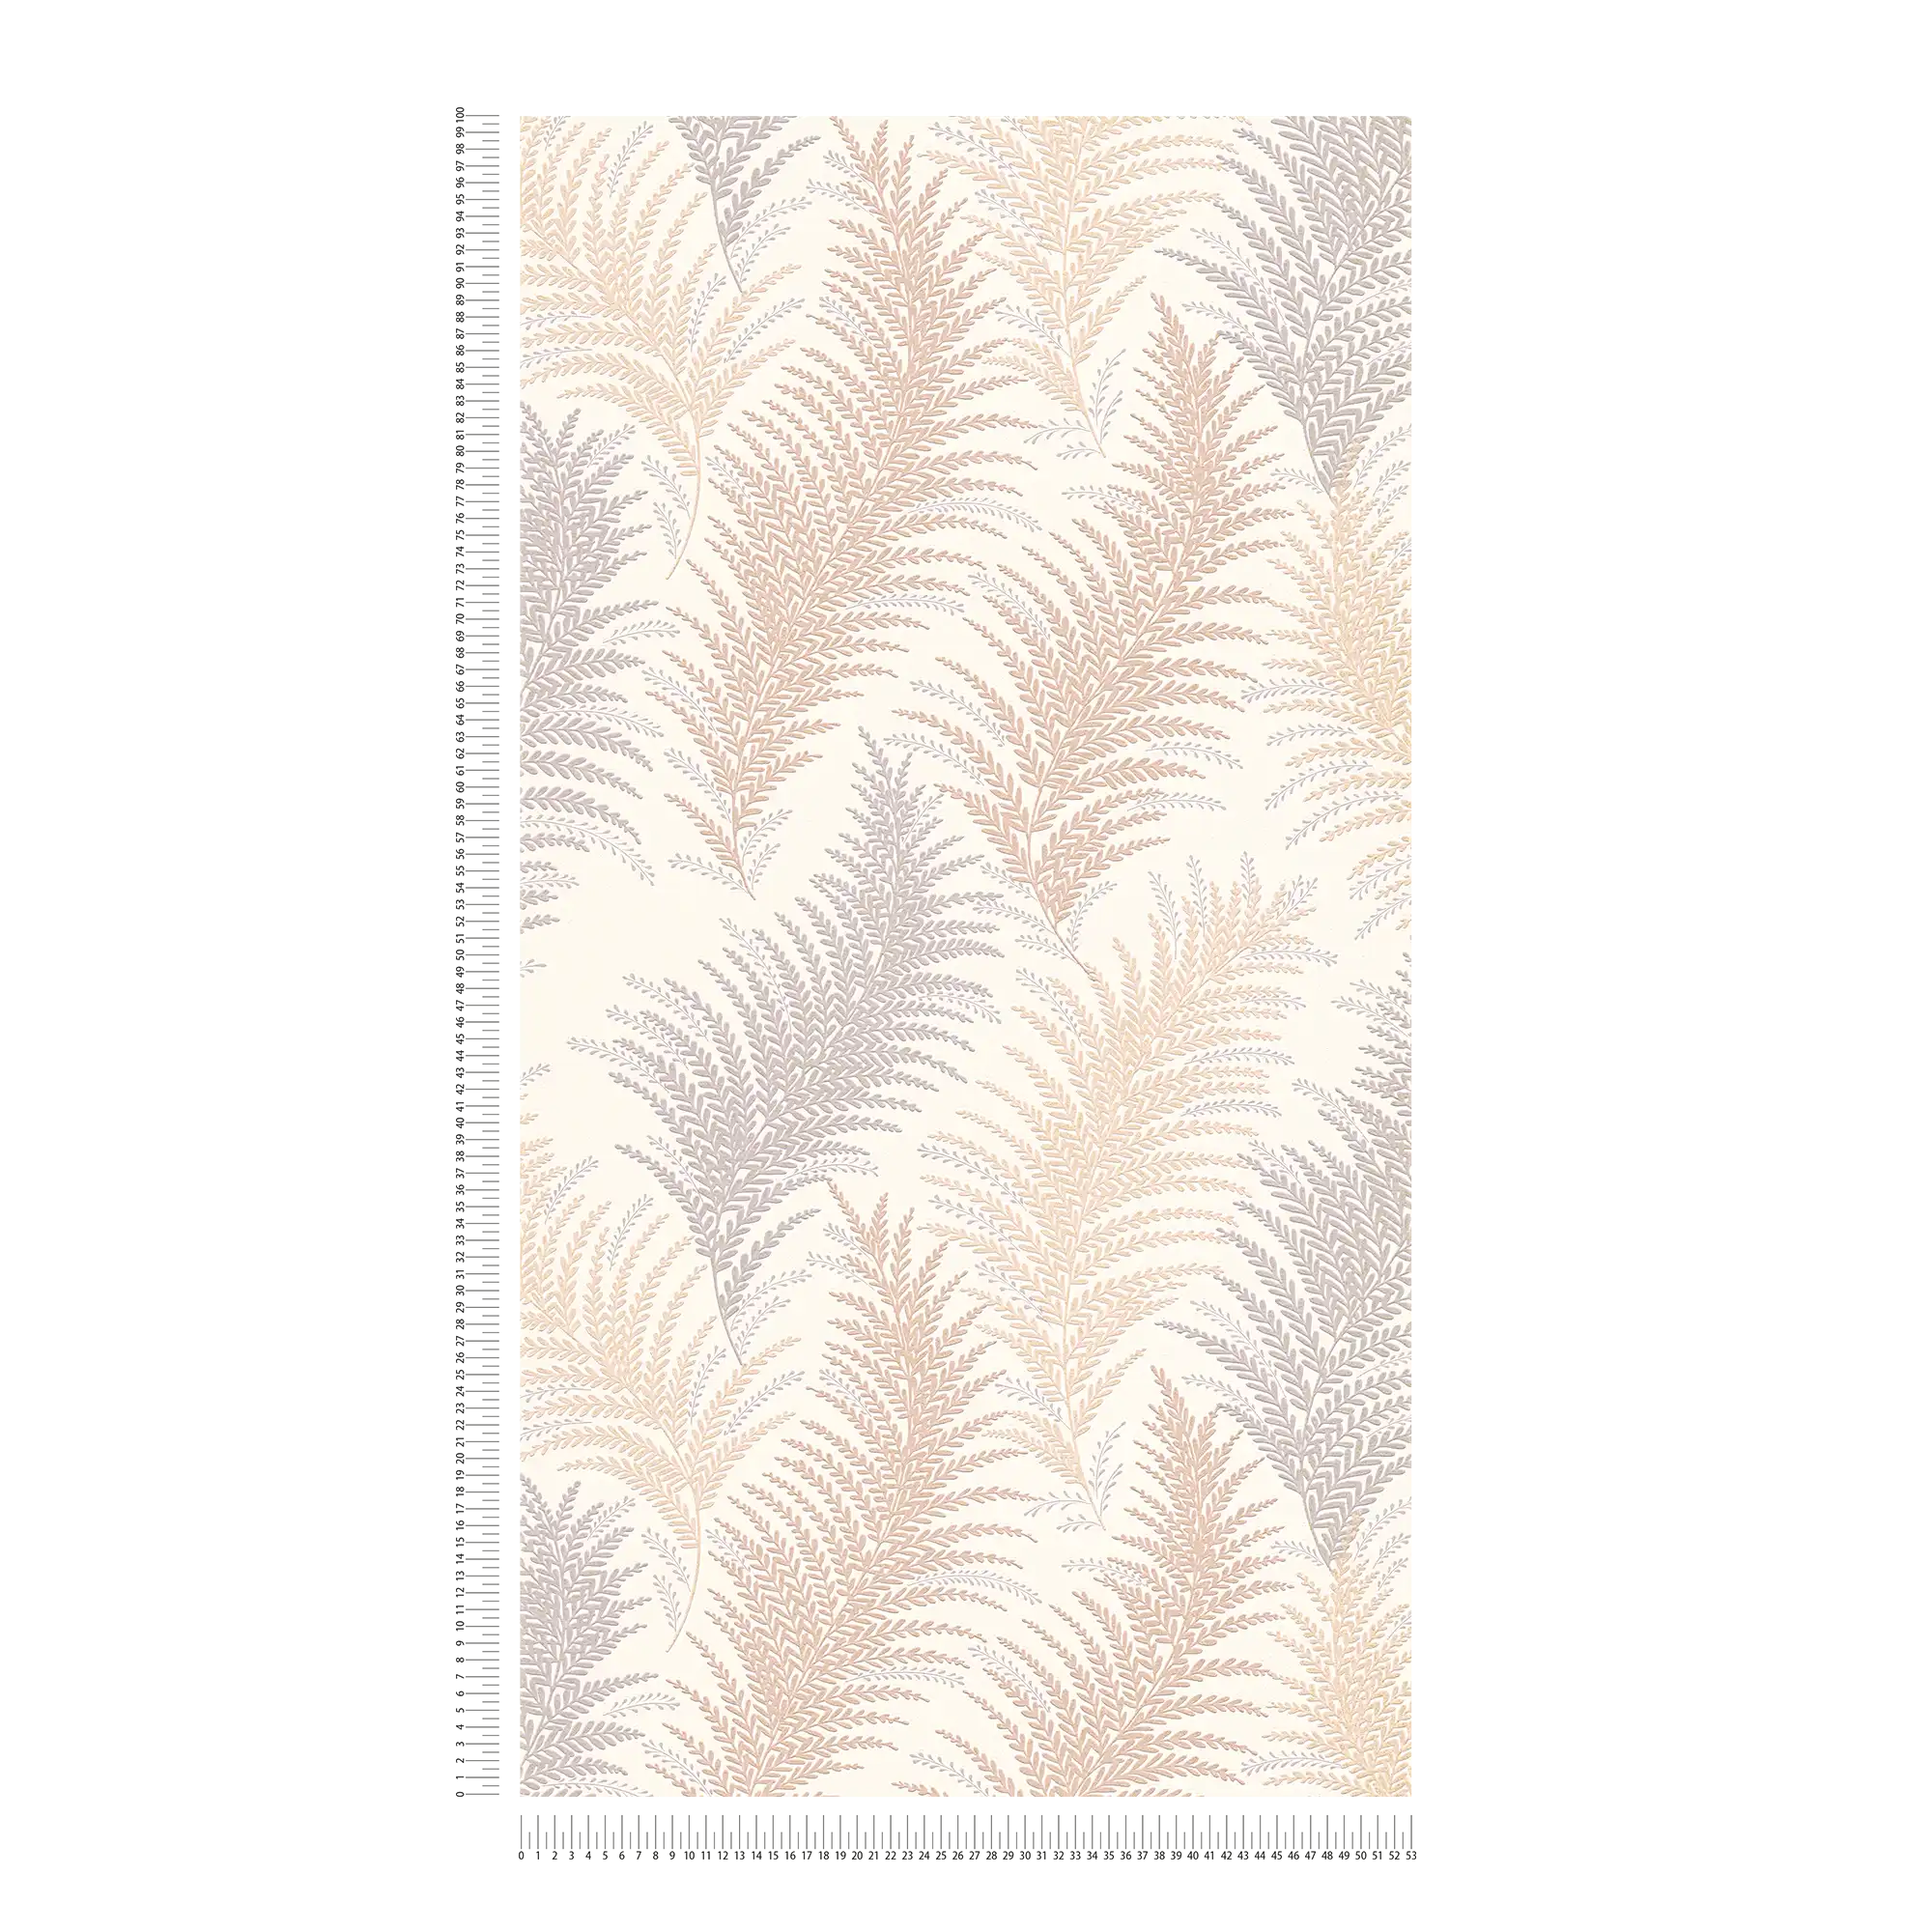             Plant pattern from ferns in metallic colours - beige, grey, bronze, white
        